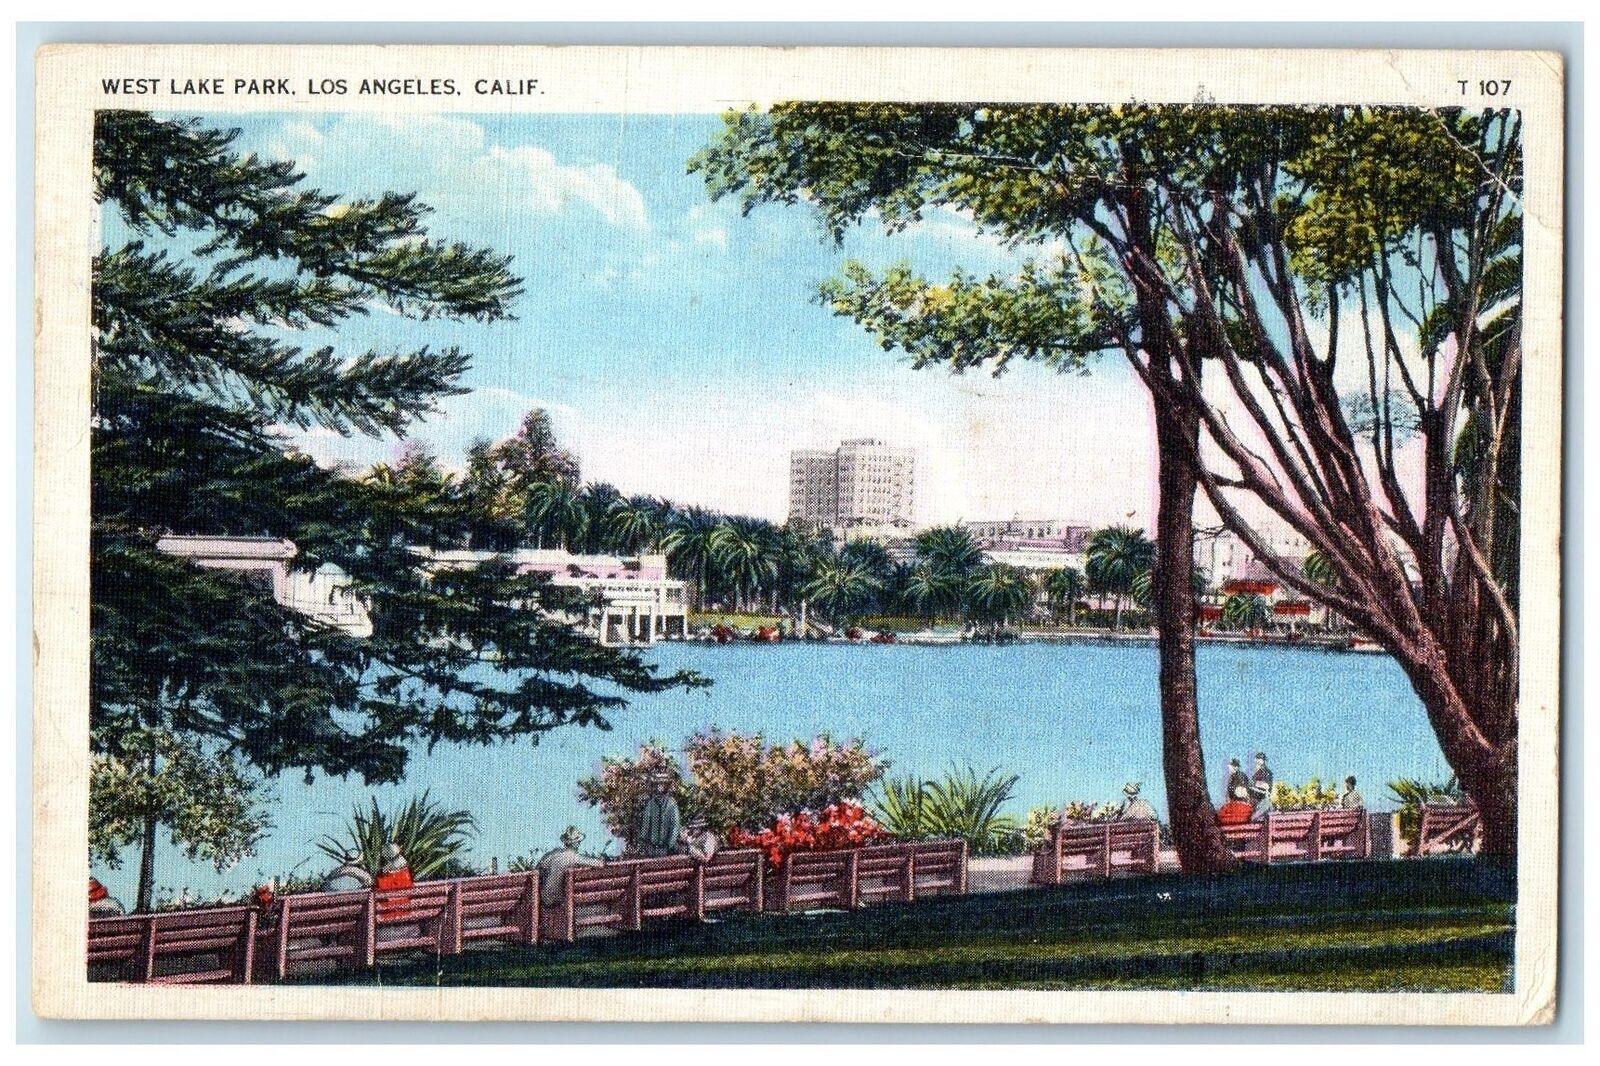 1937 West Lake Park Buildings Tower View Los Angeles California Vintage Postcard